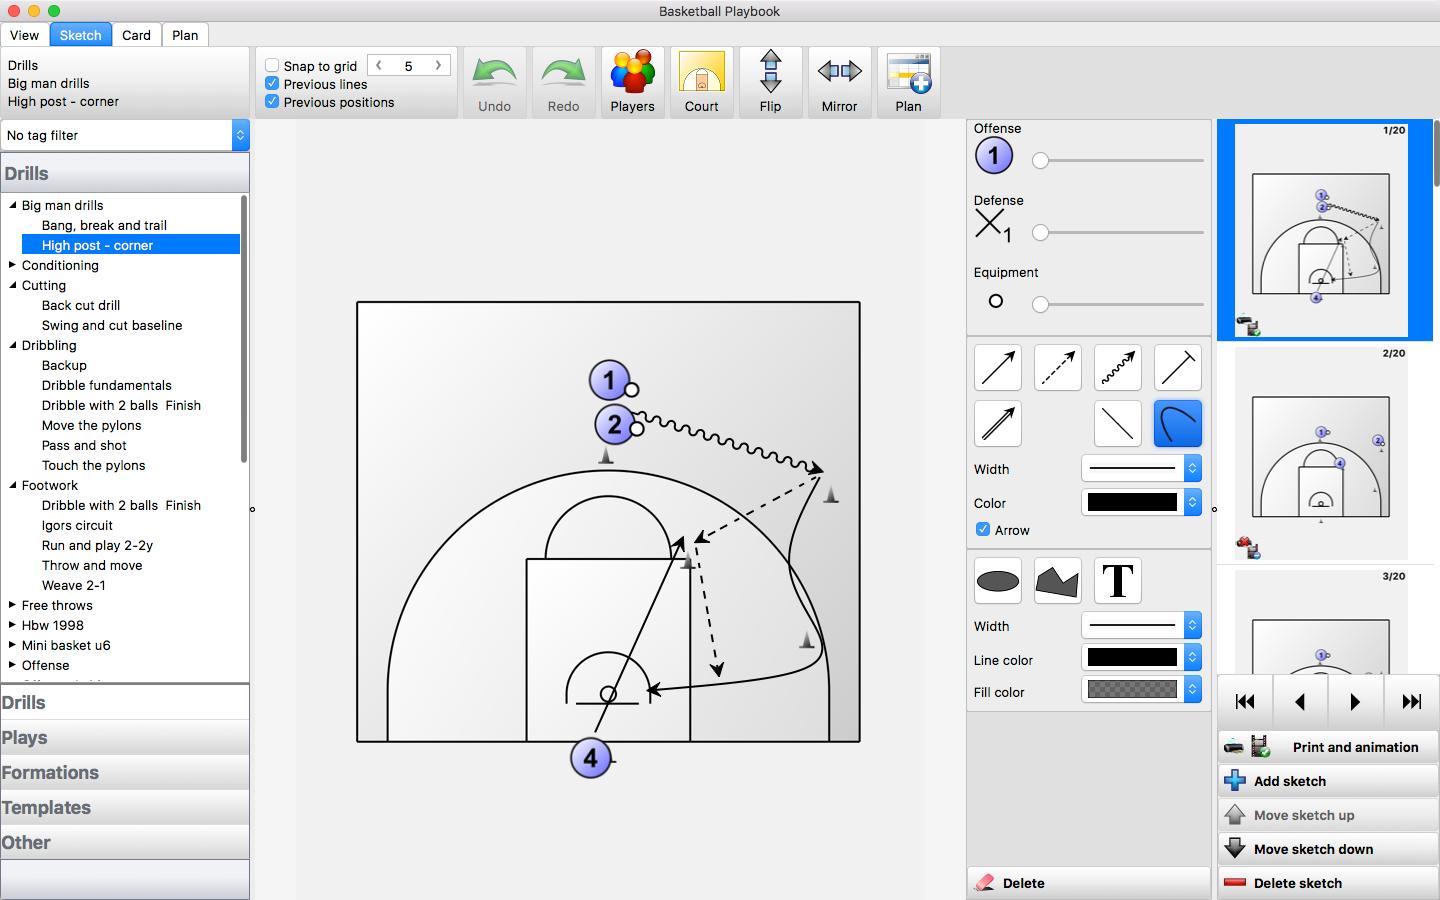 Sketch tab basketball playbook software